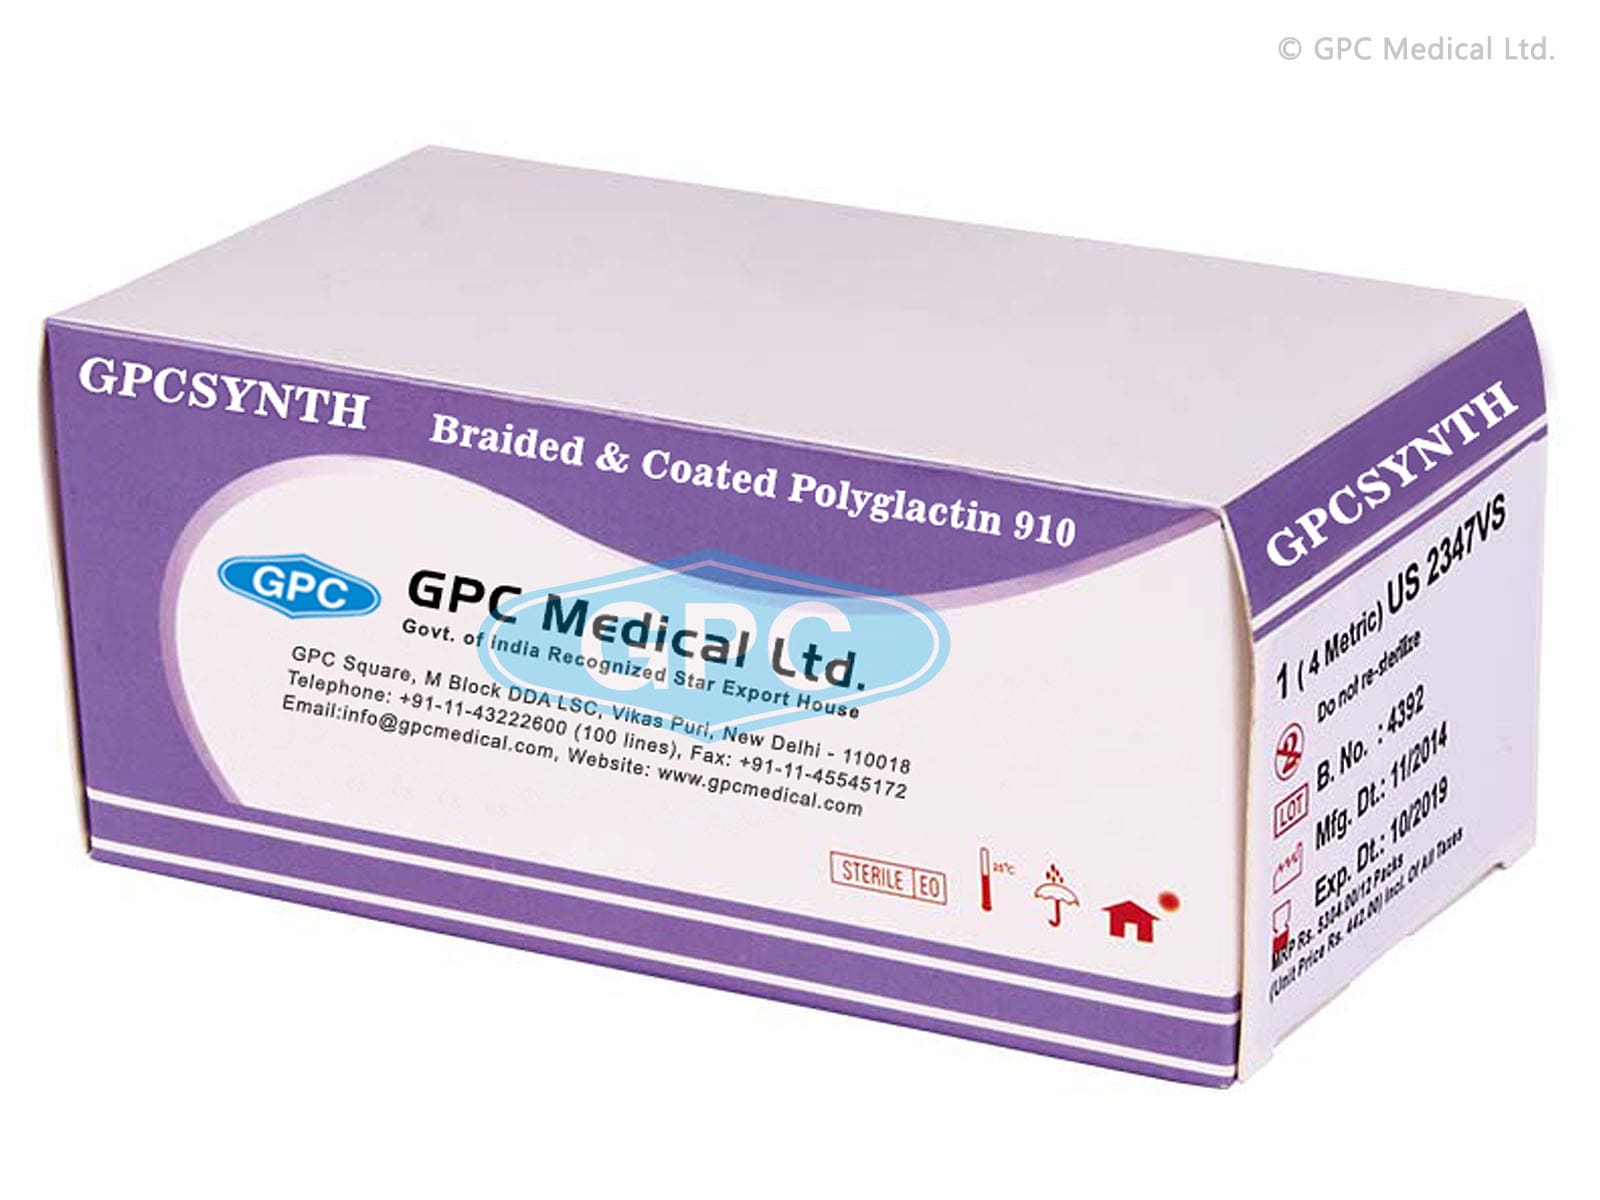 GPCSYNTH - Braided & Coated Polyglactin 910